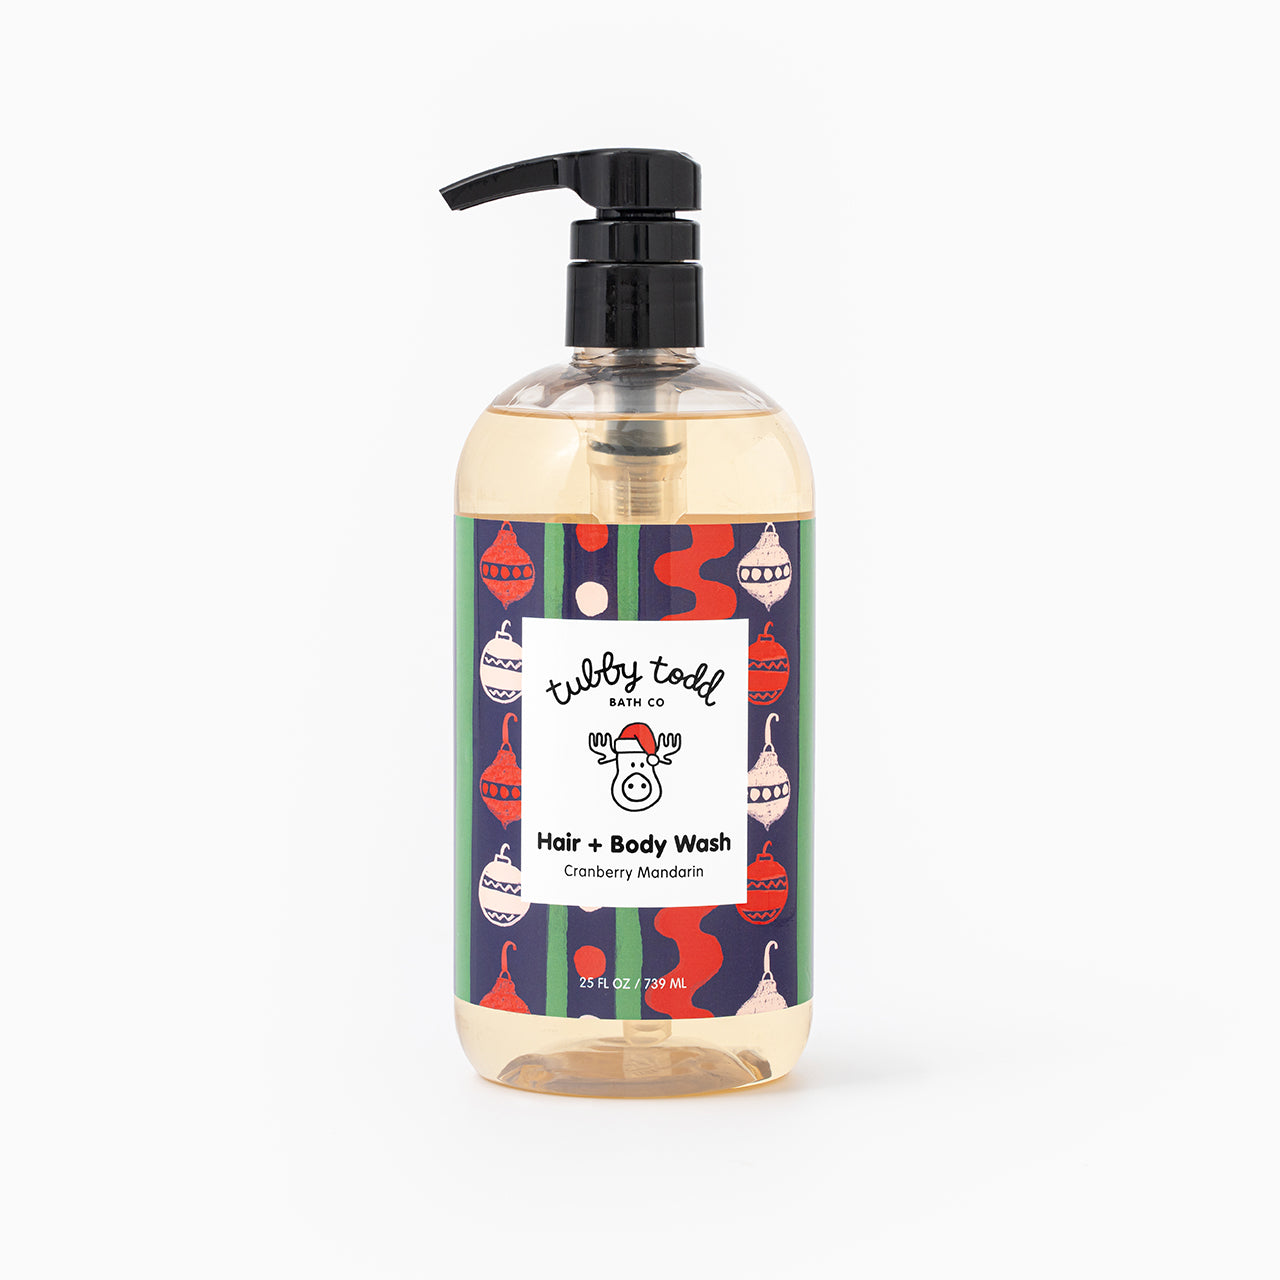 25oz Cranberry Mandarin Hair Body Wash bottle standing on the white background.